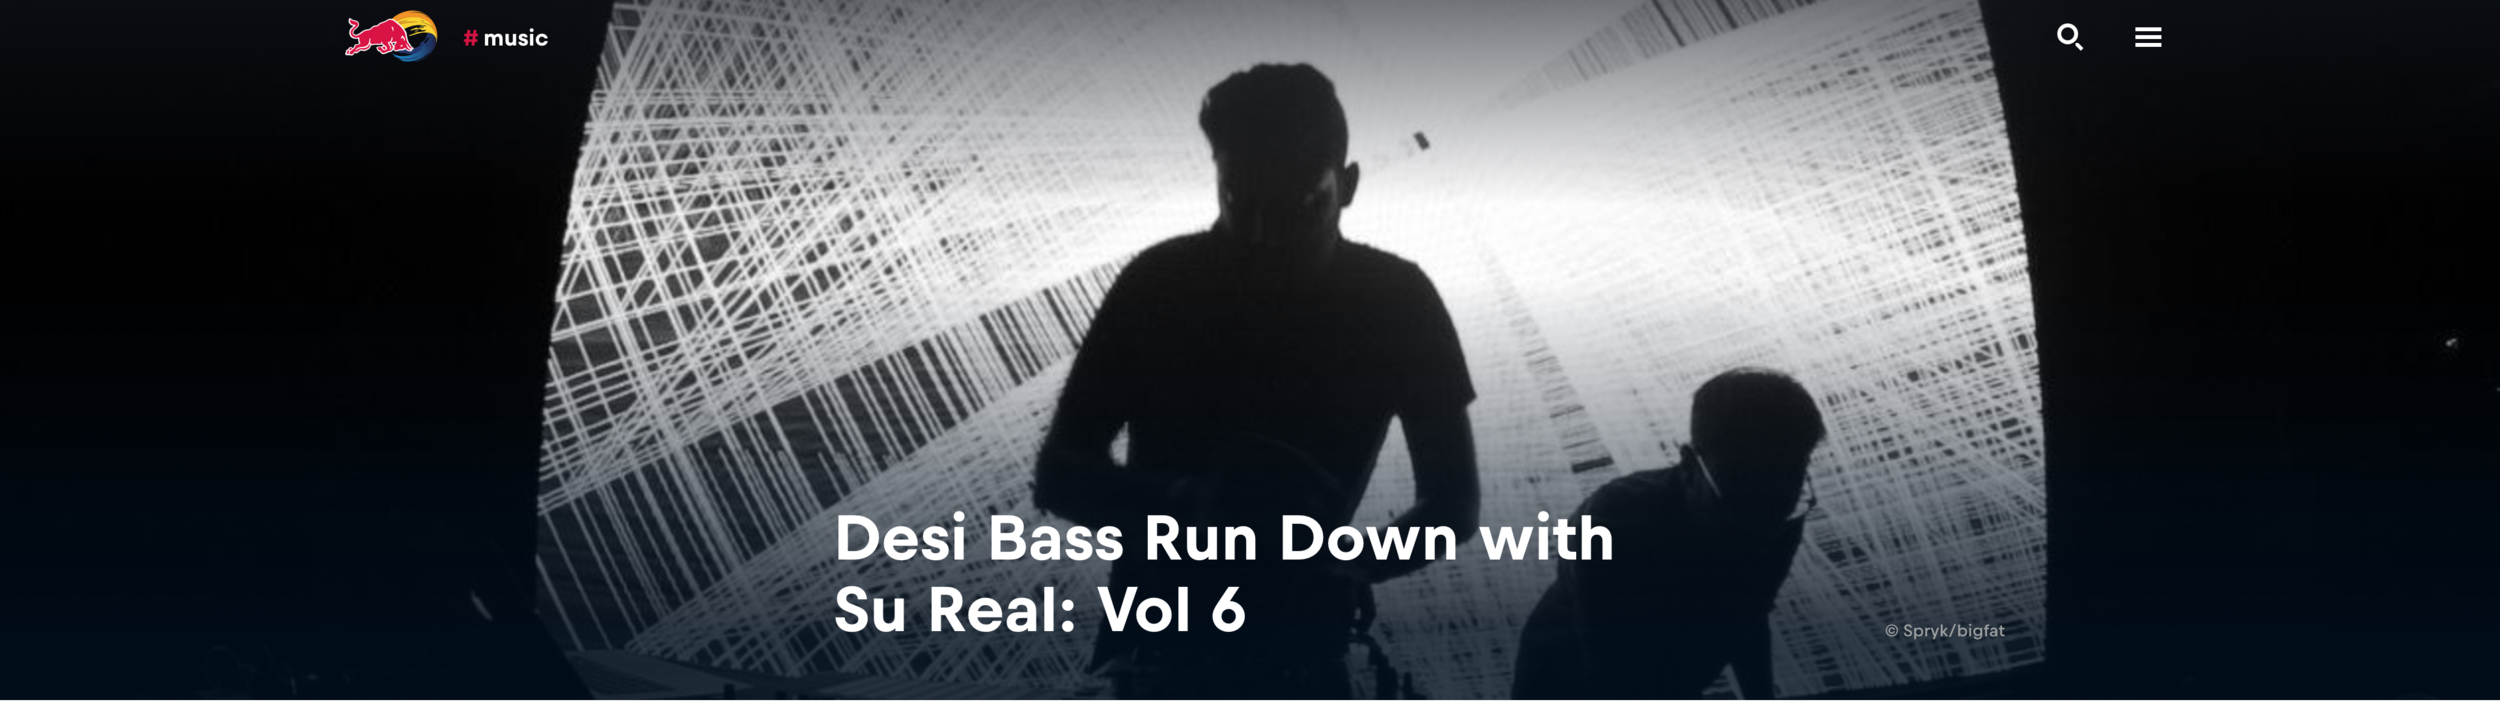 Red Bull : Desi Bass Run Down